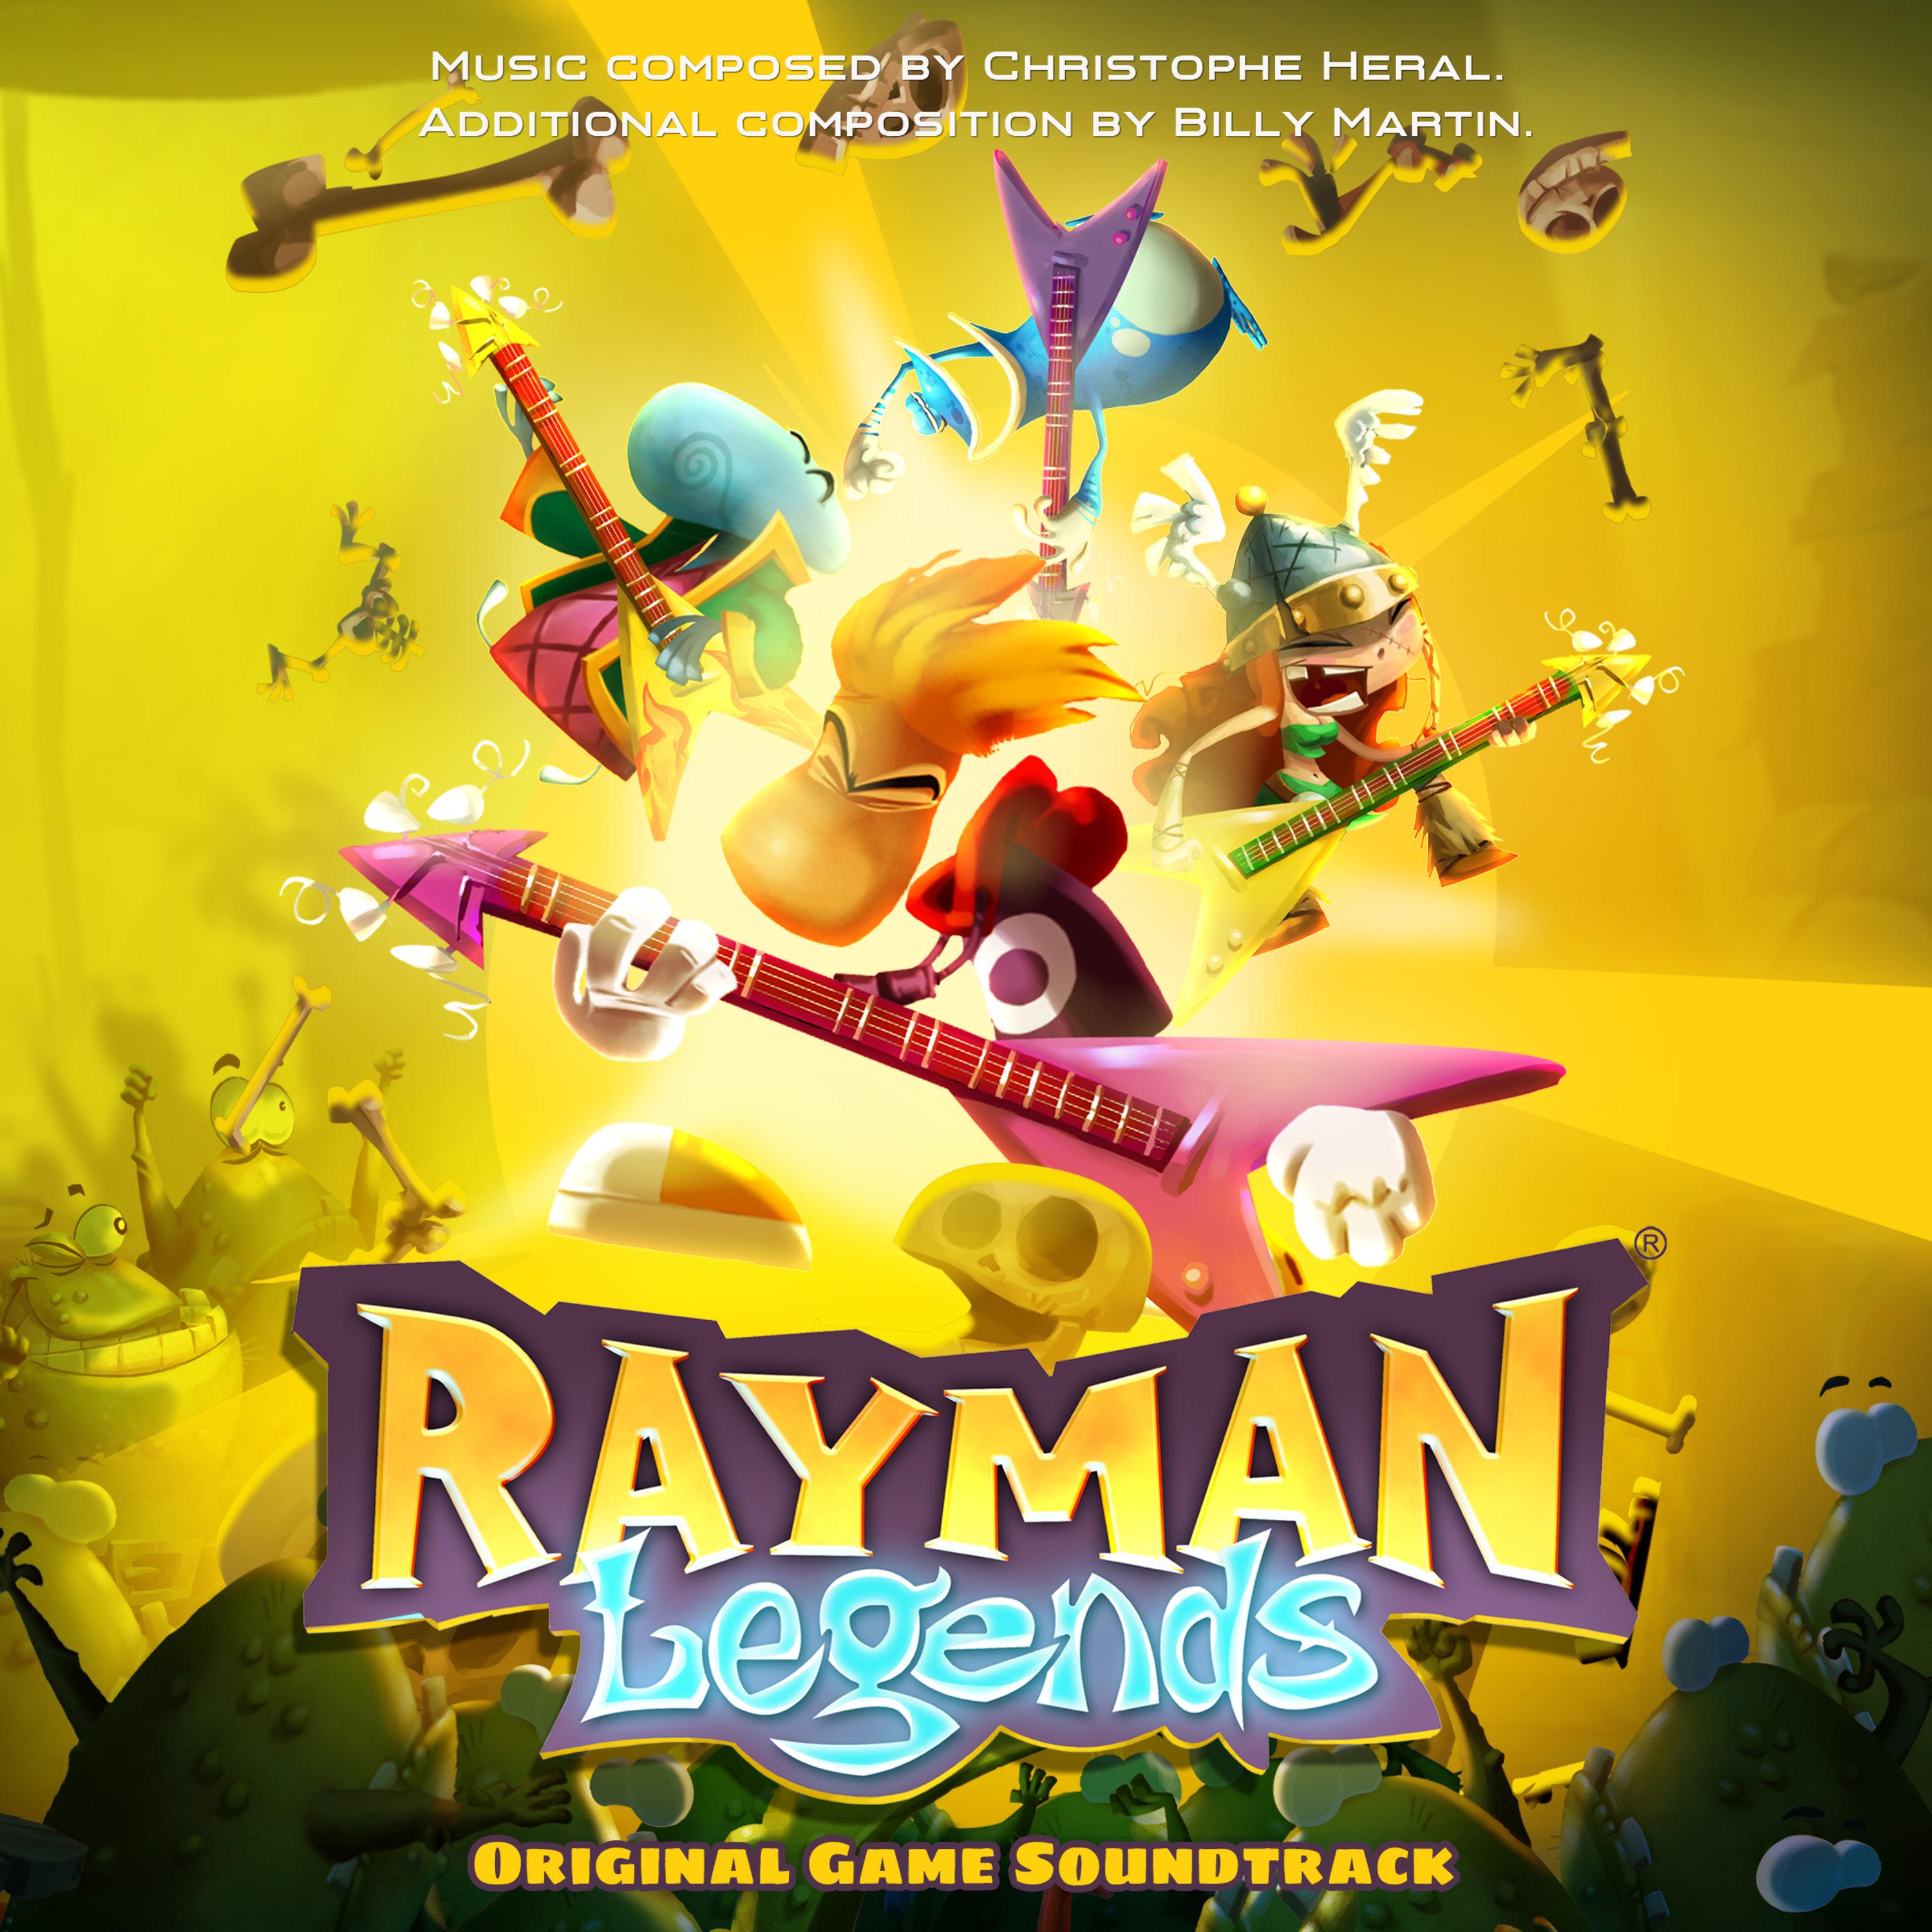 Medieval Theme歌词 歌手Christophe Héral-专辑Rayman Legends (Original Game Soundtrack)-单曲《Medieval Theme》LRC歌词下载